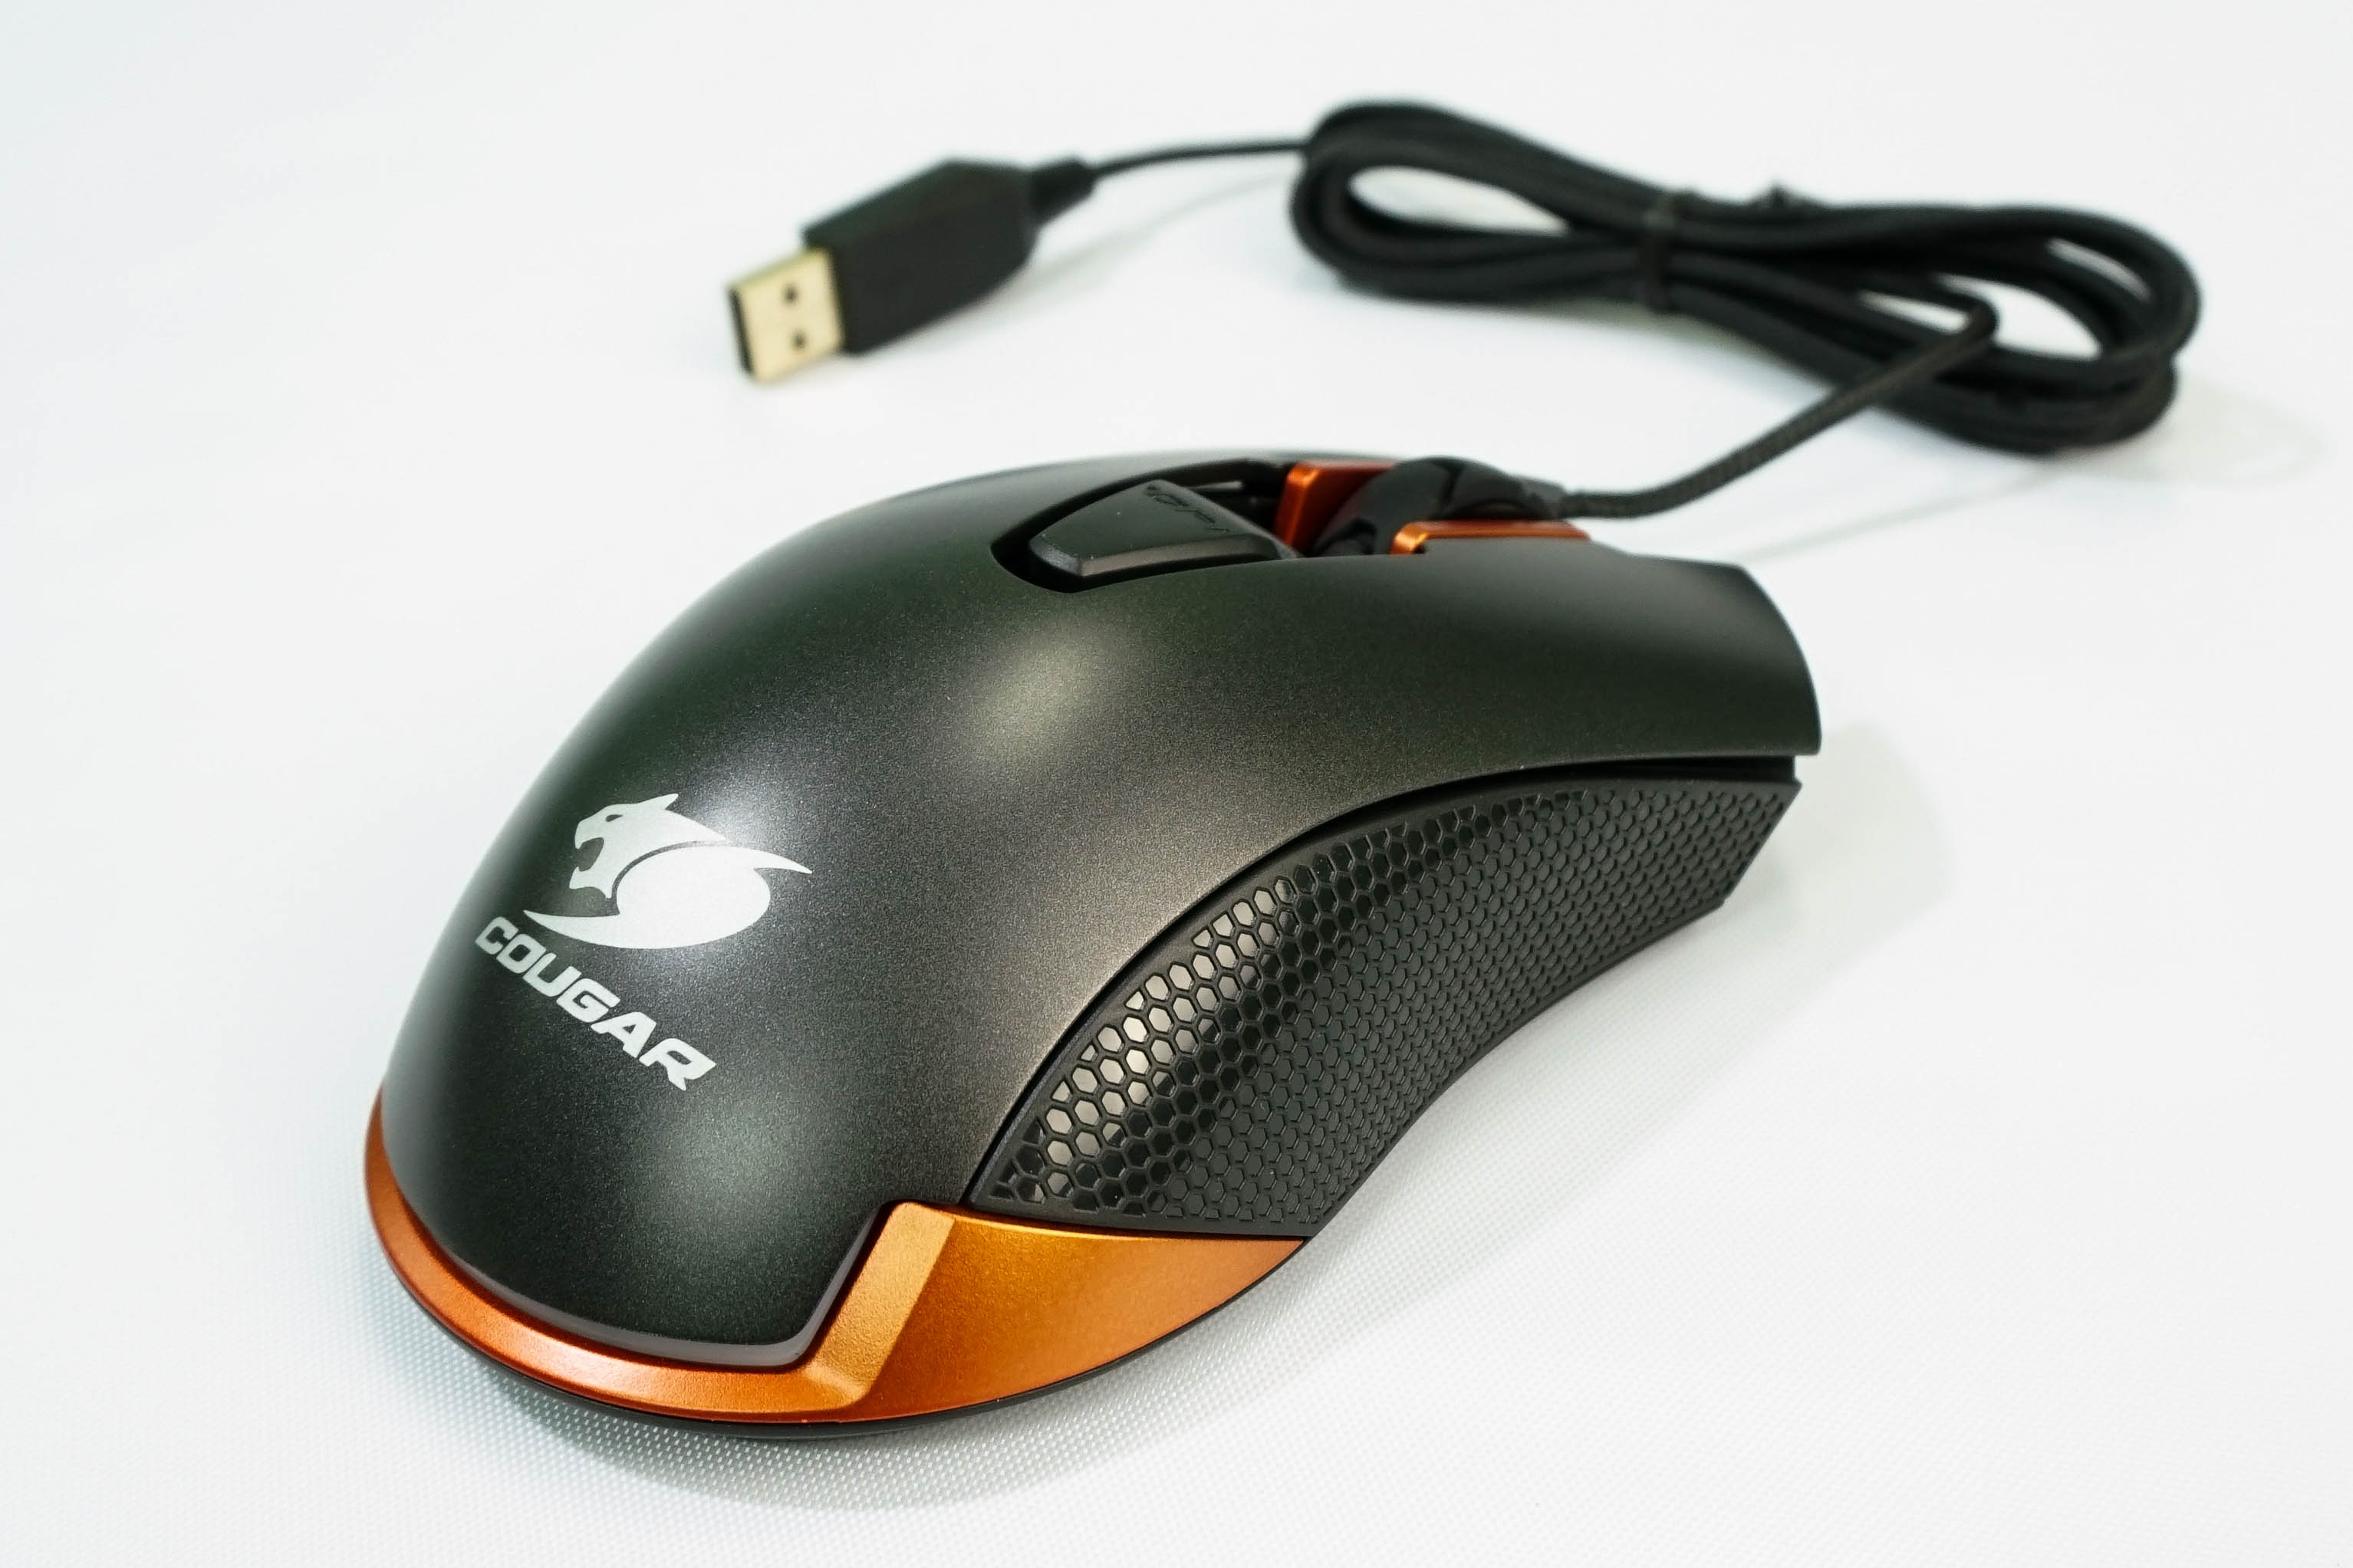 Cougar 550M Iron Grey RGB Led - Ultimate Optical Gaming Mouse